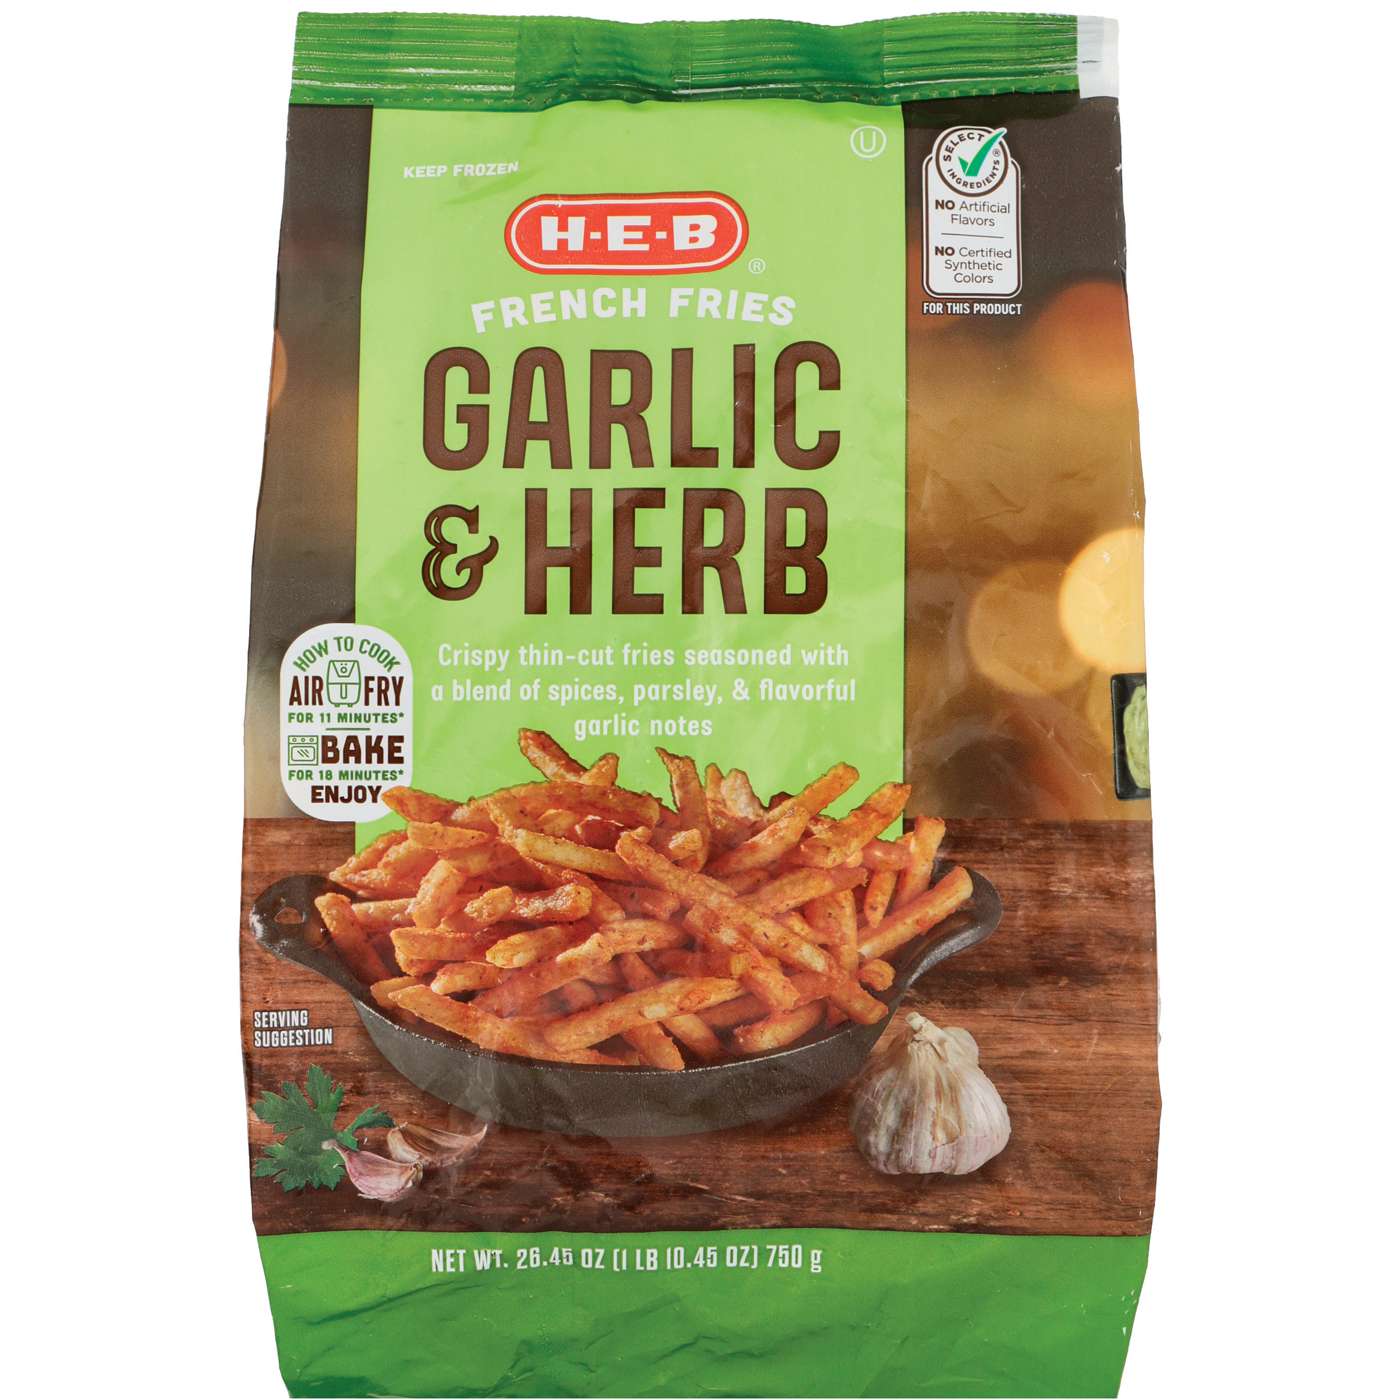 H-E-B Frozen French Fries – Garlic & Herb; image 1 of 2